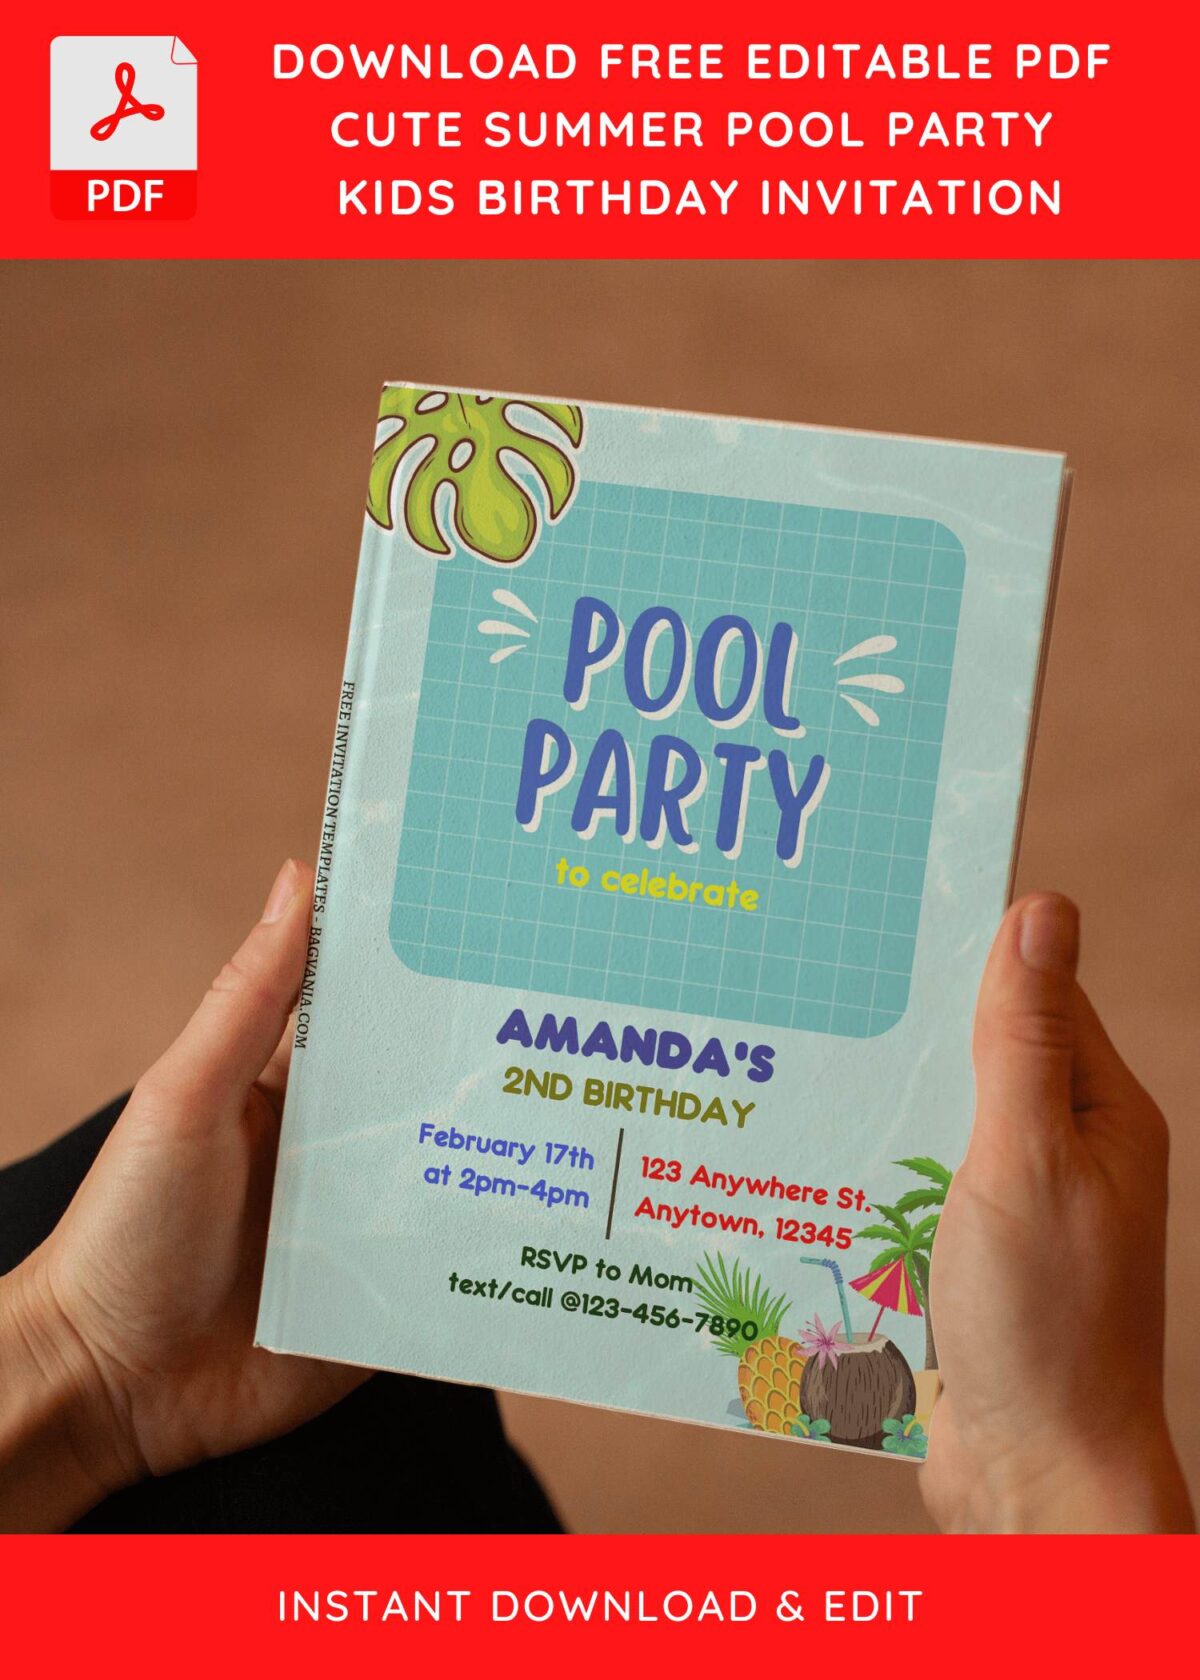 (Free Editable PDF) Adorable Cartoon Pool Kids Birthday Invitation Templates with adorable cartoon palm tree